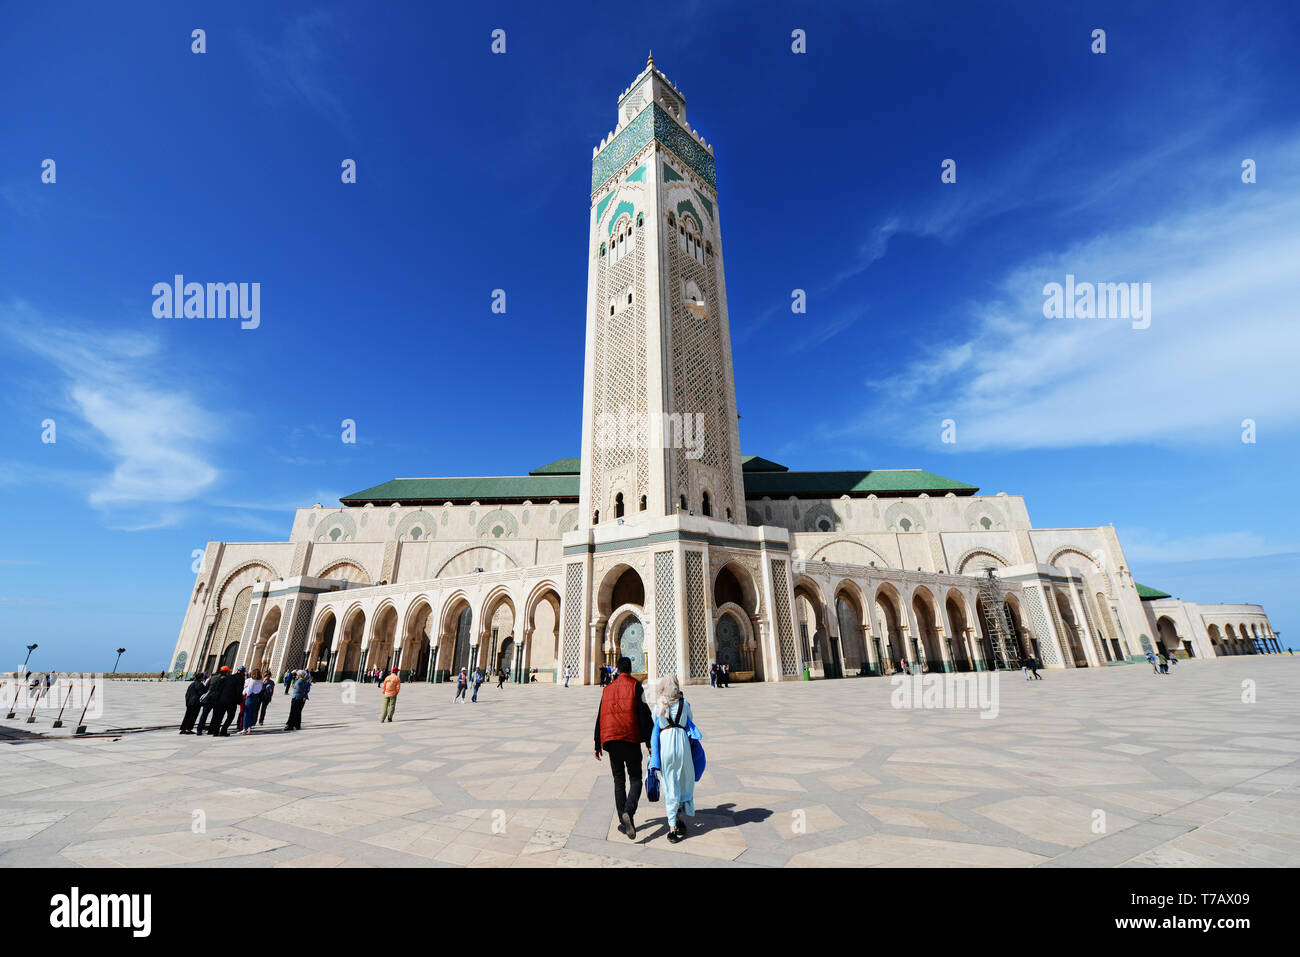 The Hassan II mosque in Casablanca, Morocco. Stock Photo